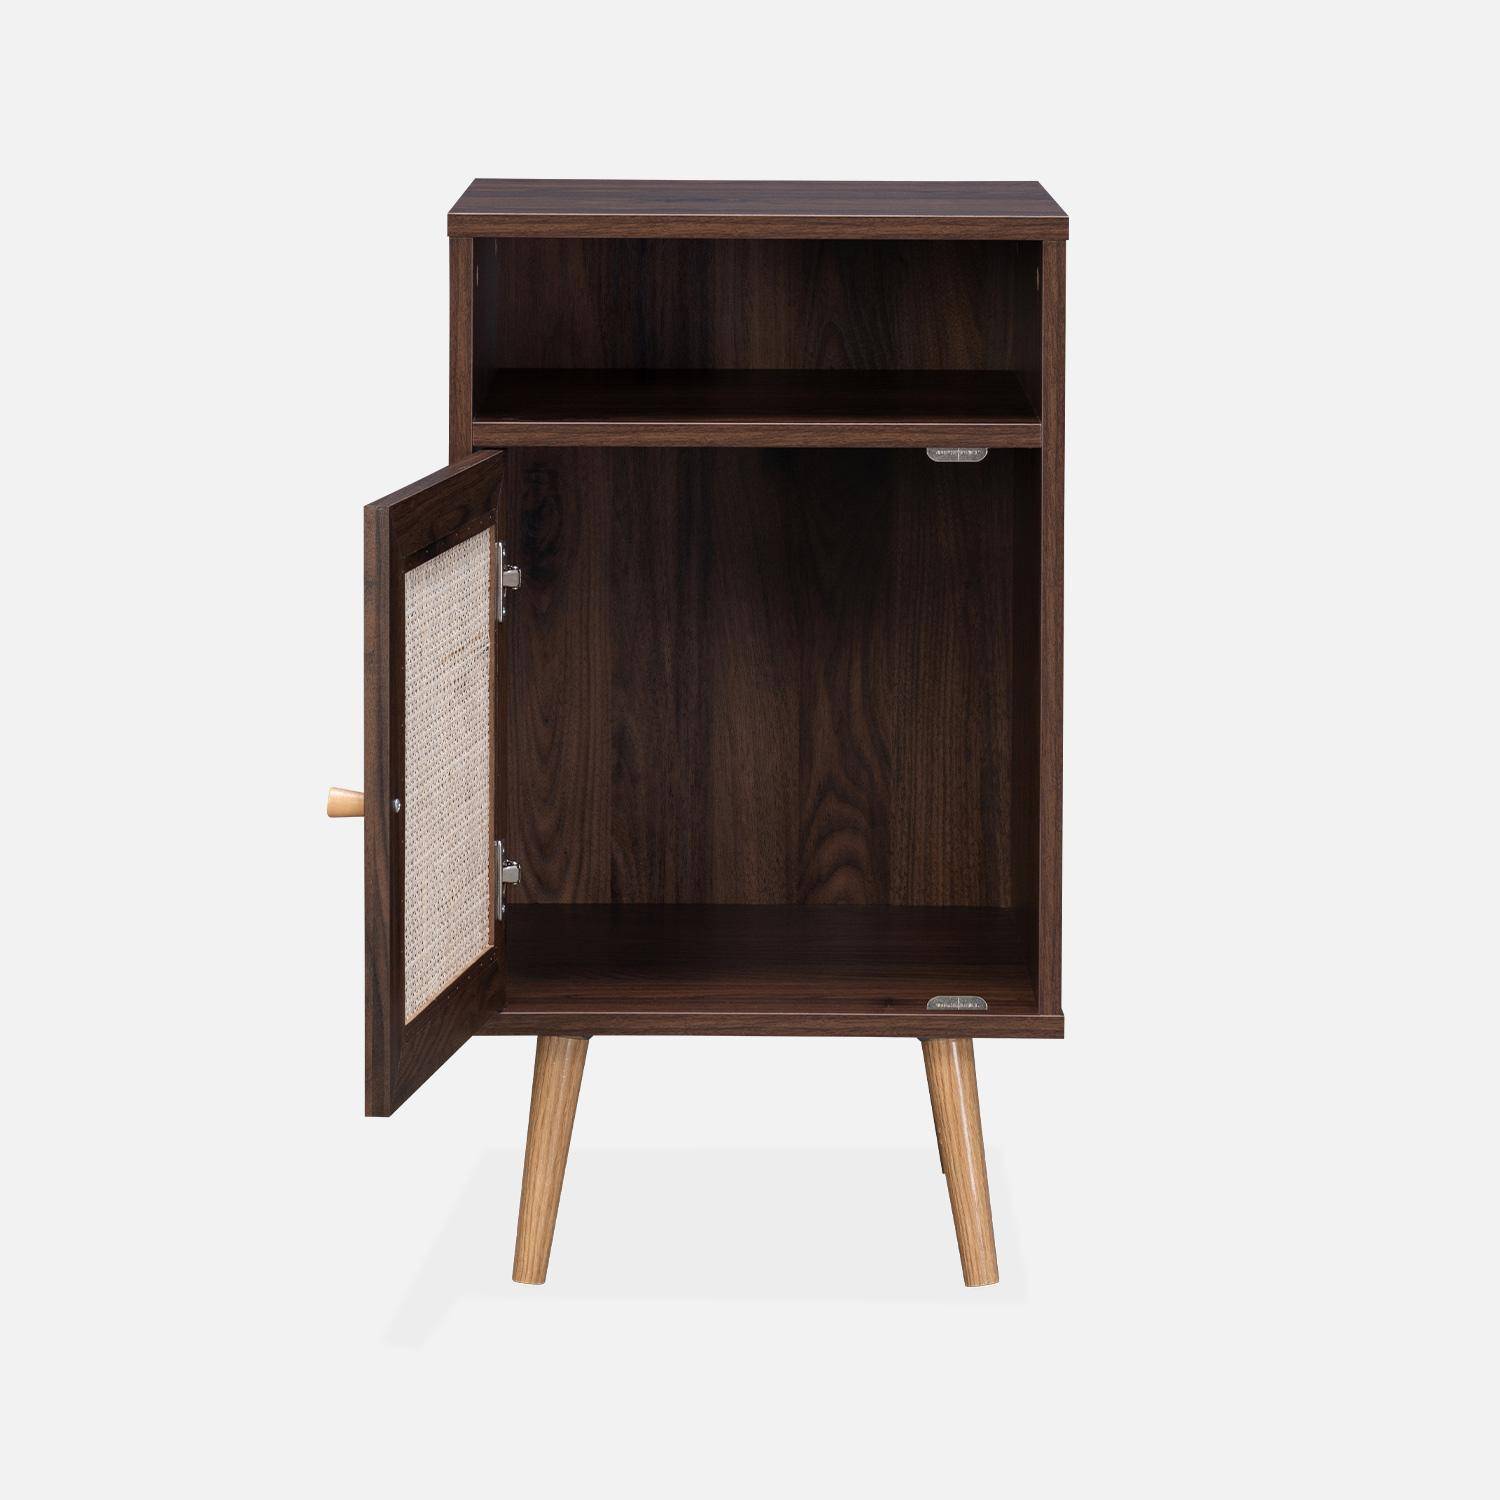 Scandi-style wood and cane rattan bedside table with cupboard, 40x39x70cm - Boheme - Dark Wood colour,sweeek,Photo4